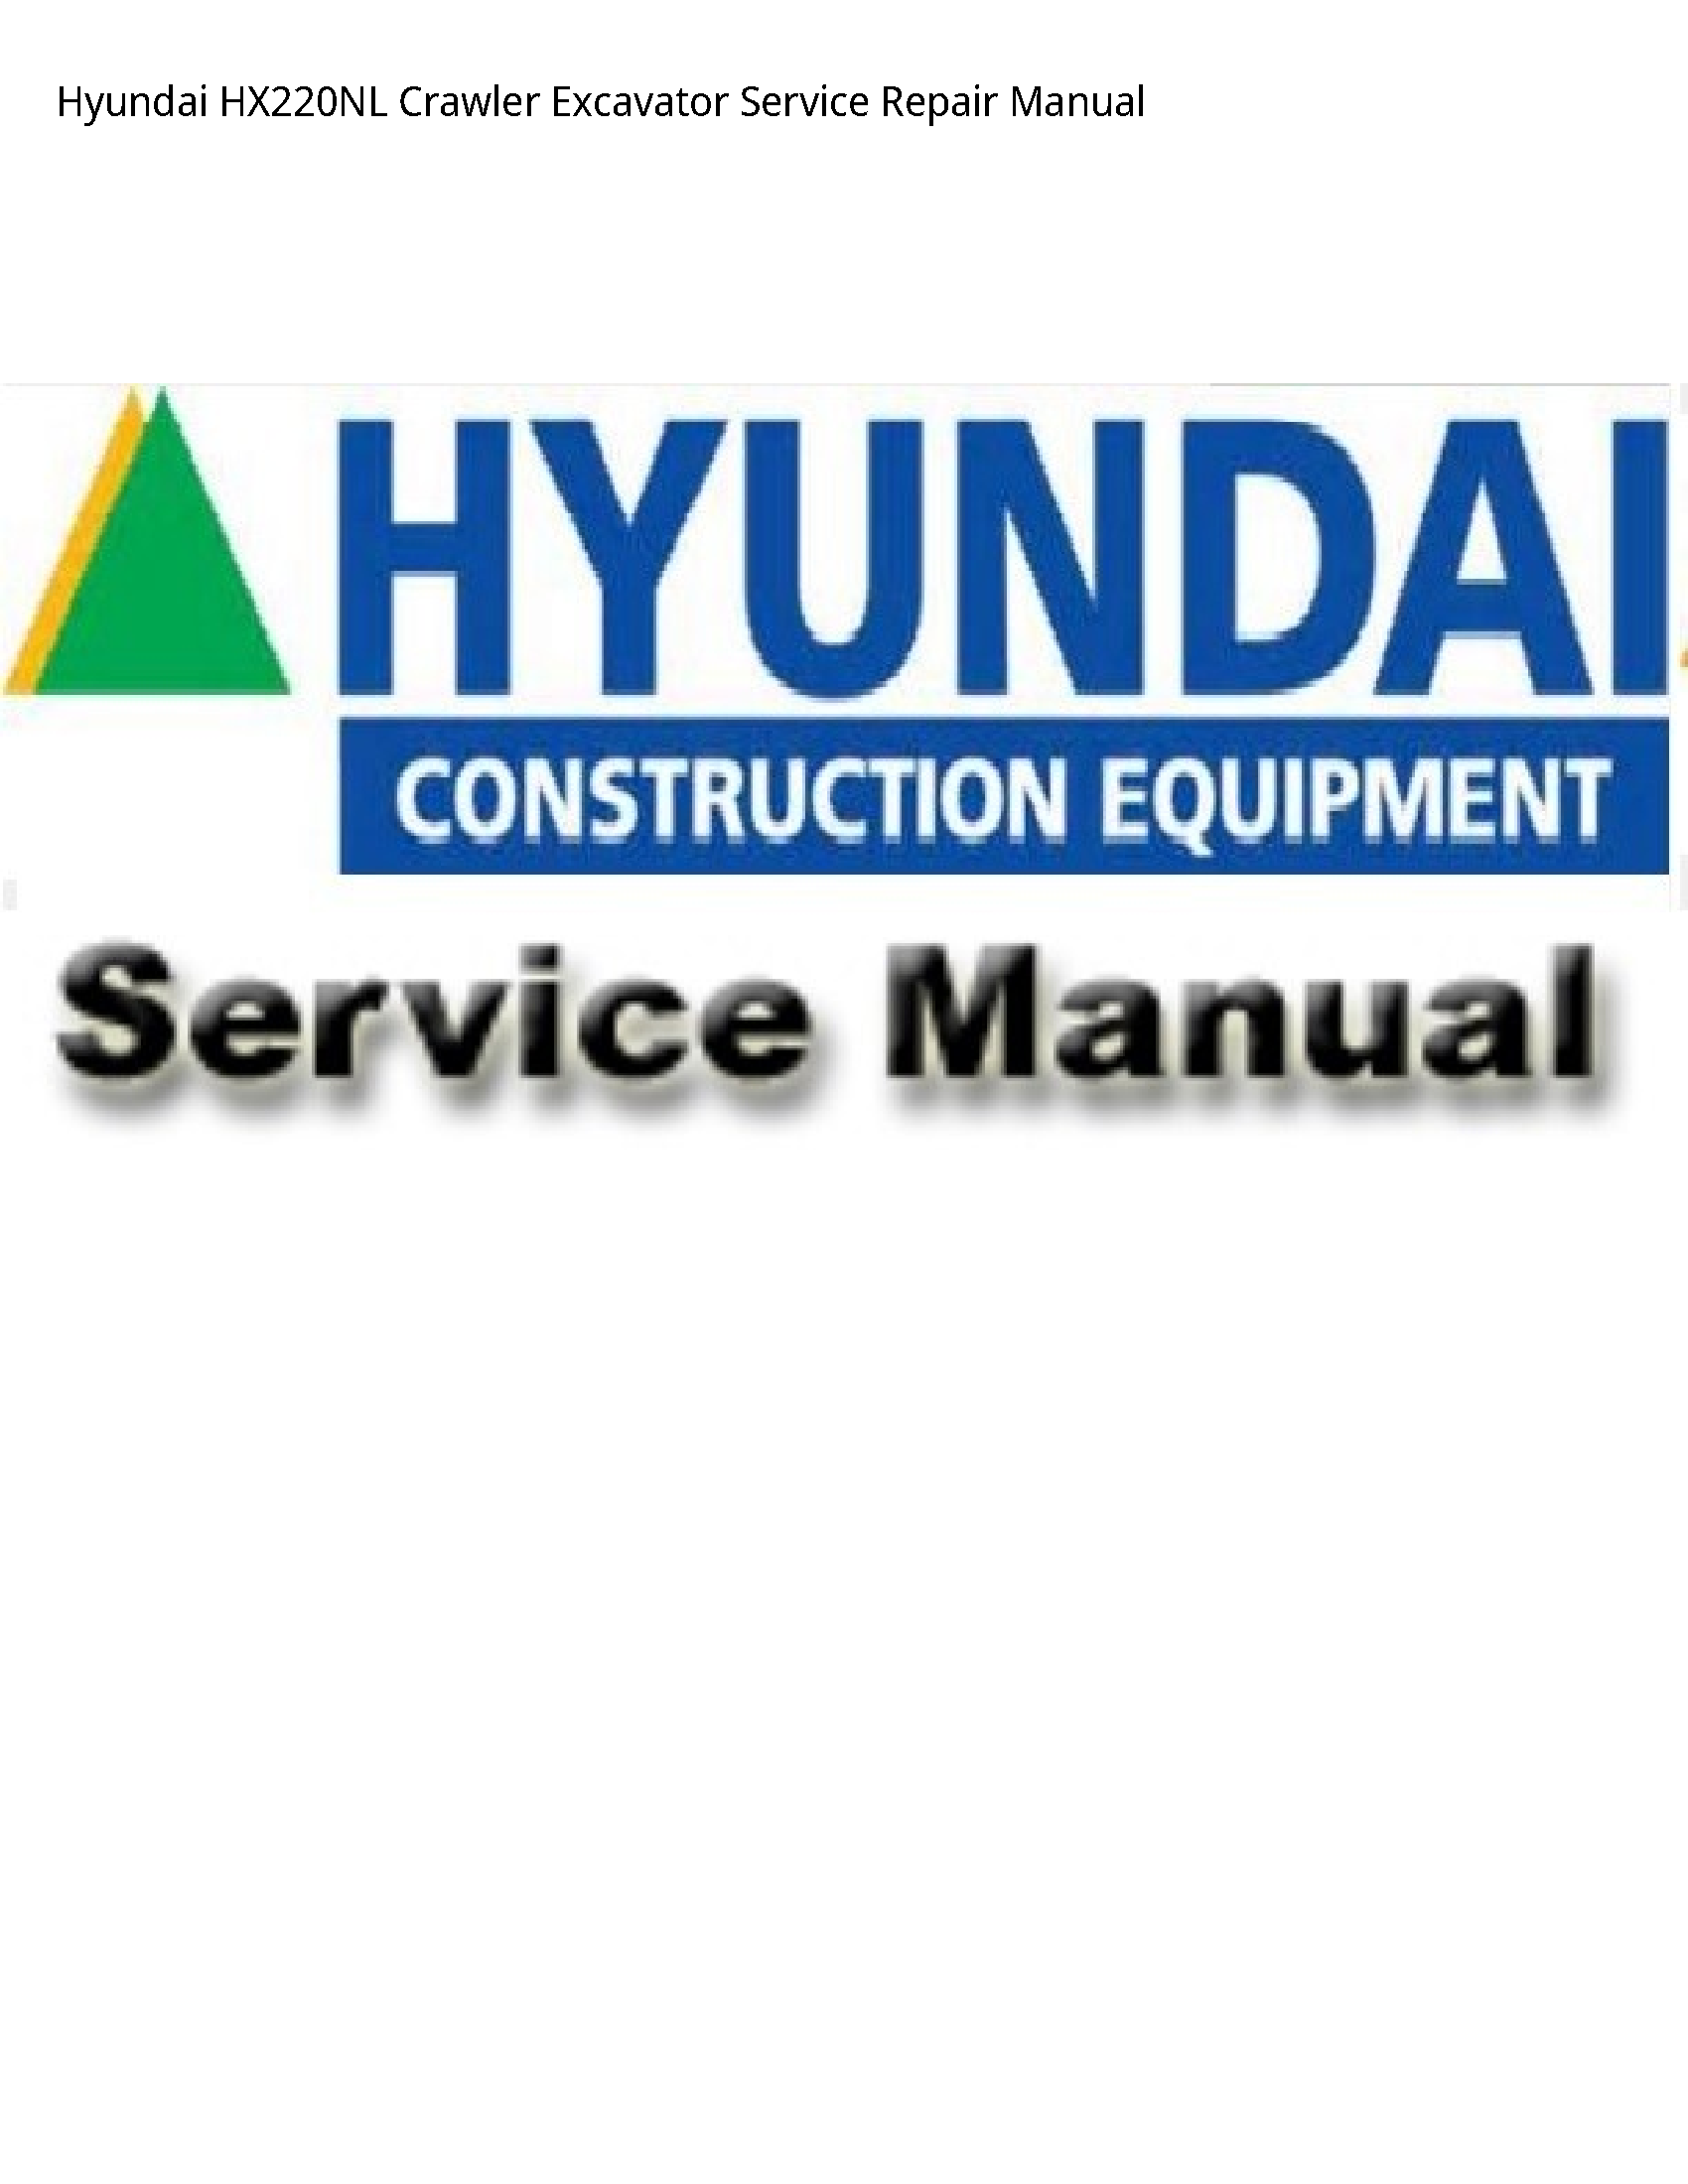 Hyundai HX220NL Crawler Excavator manual